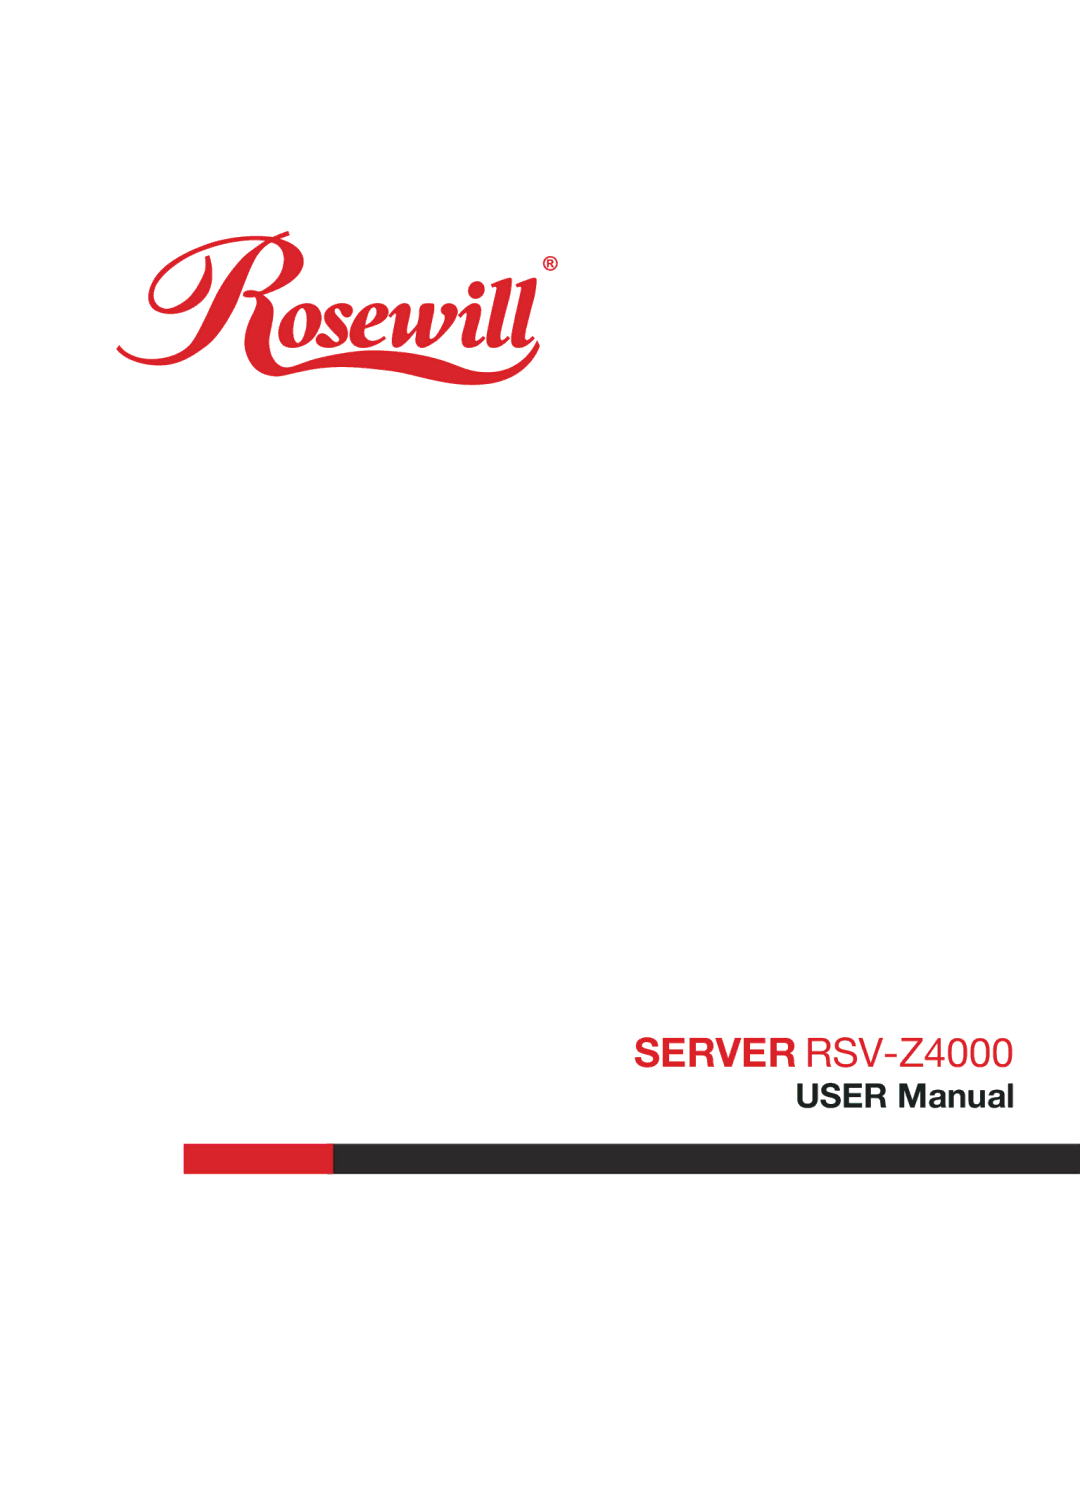 Rosewill user manual Server RSV-Z4000 